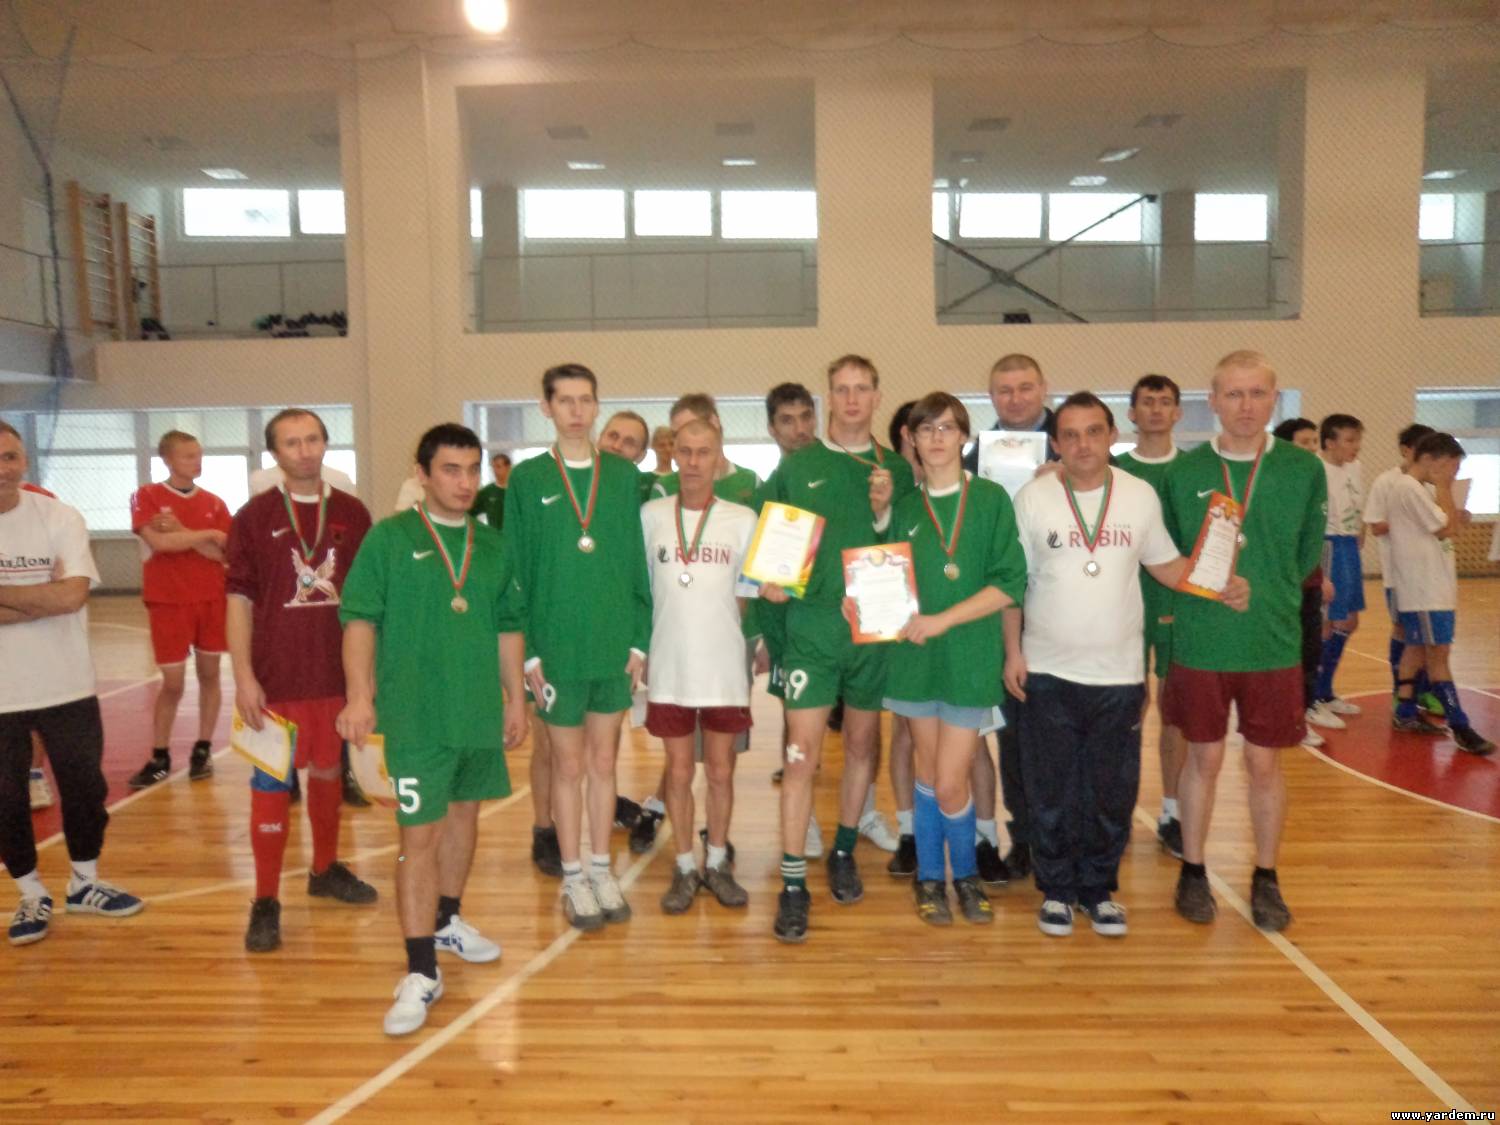 Команда "Ярдэм" инвалидов с ДЦП заняла второе место по мини футболу. Спорт